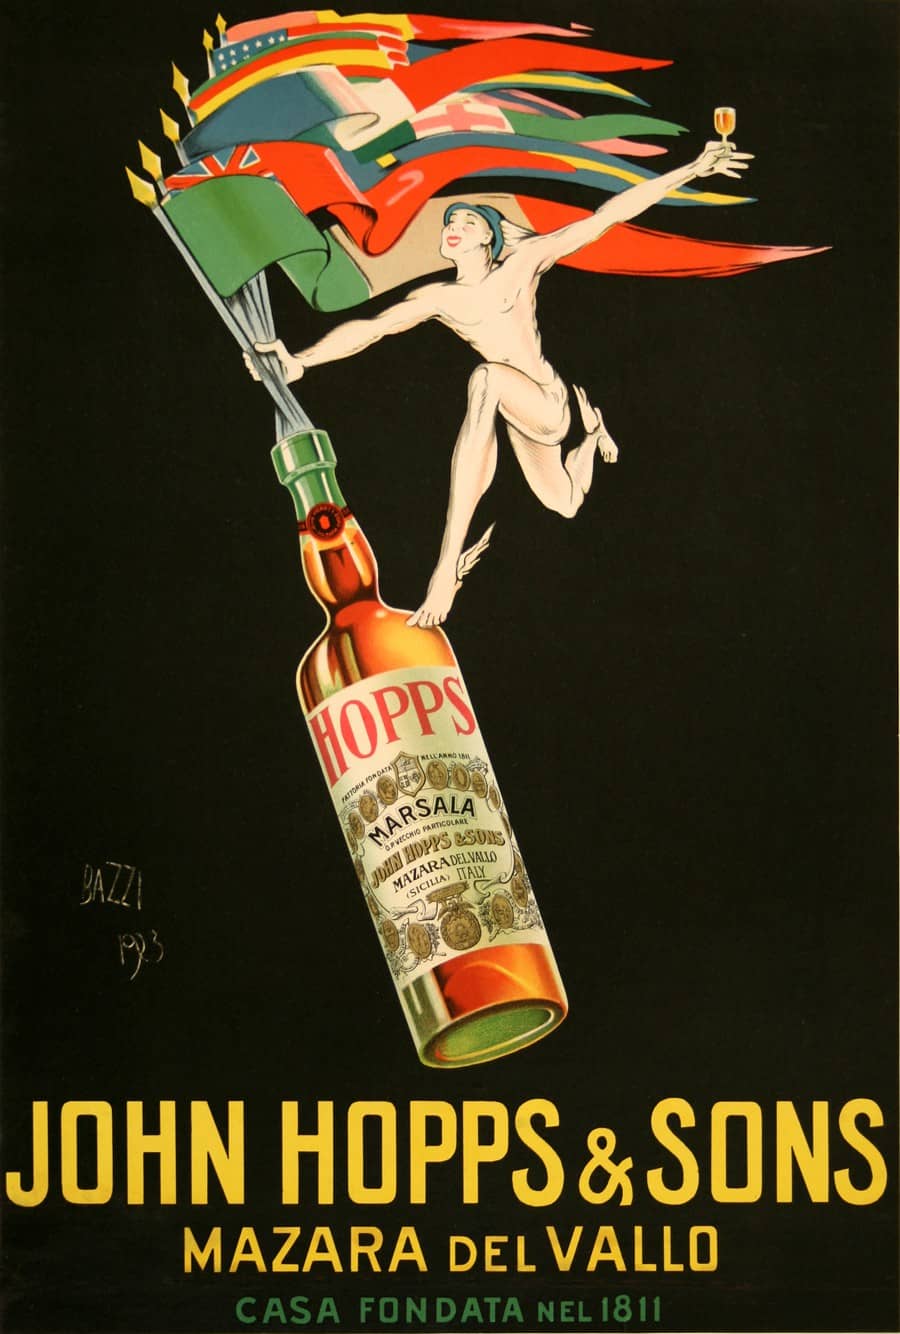 Original Vintage Italian John Hopps Poster 1923 by Bazzi for Marsala Wine